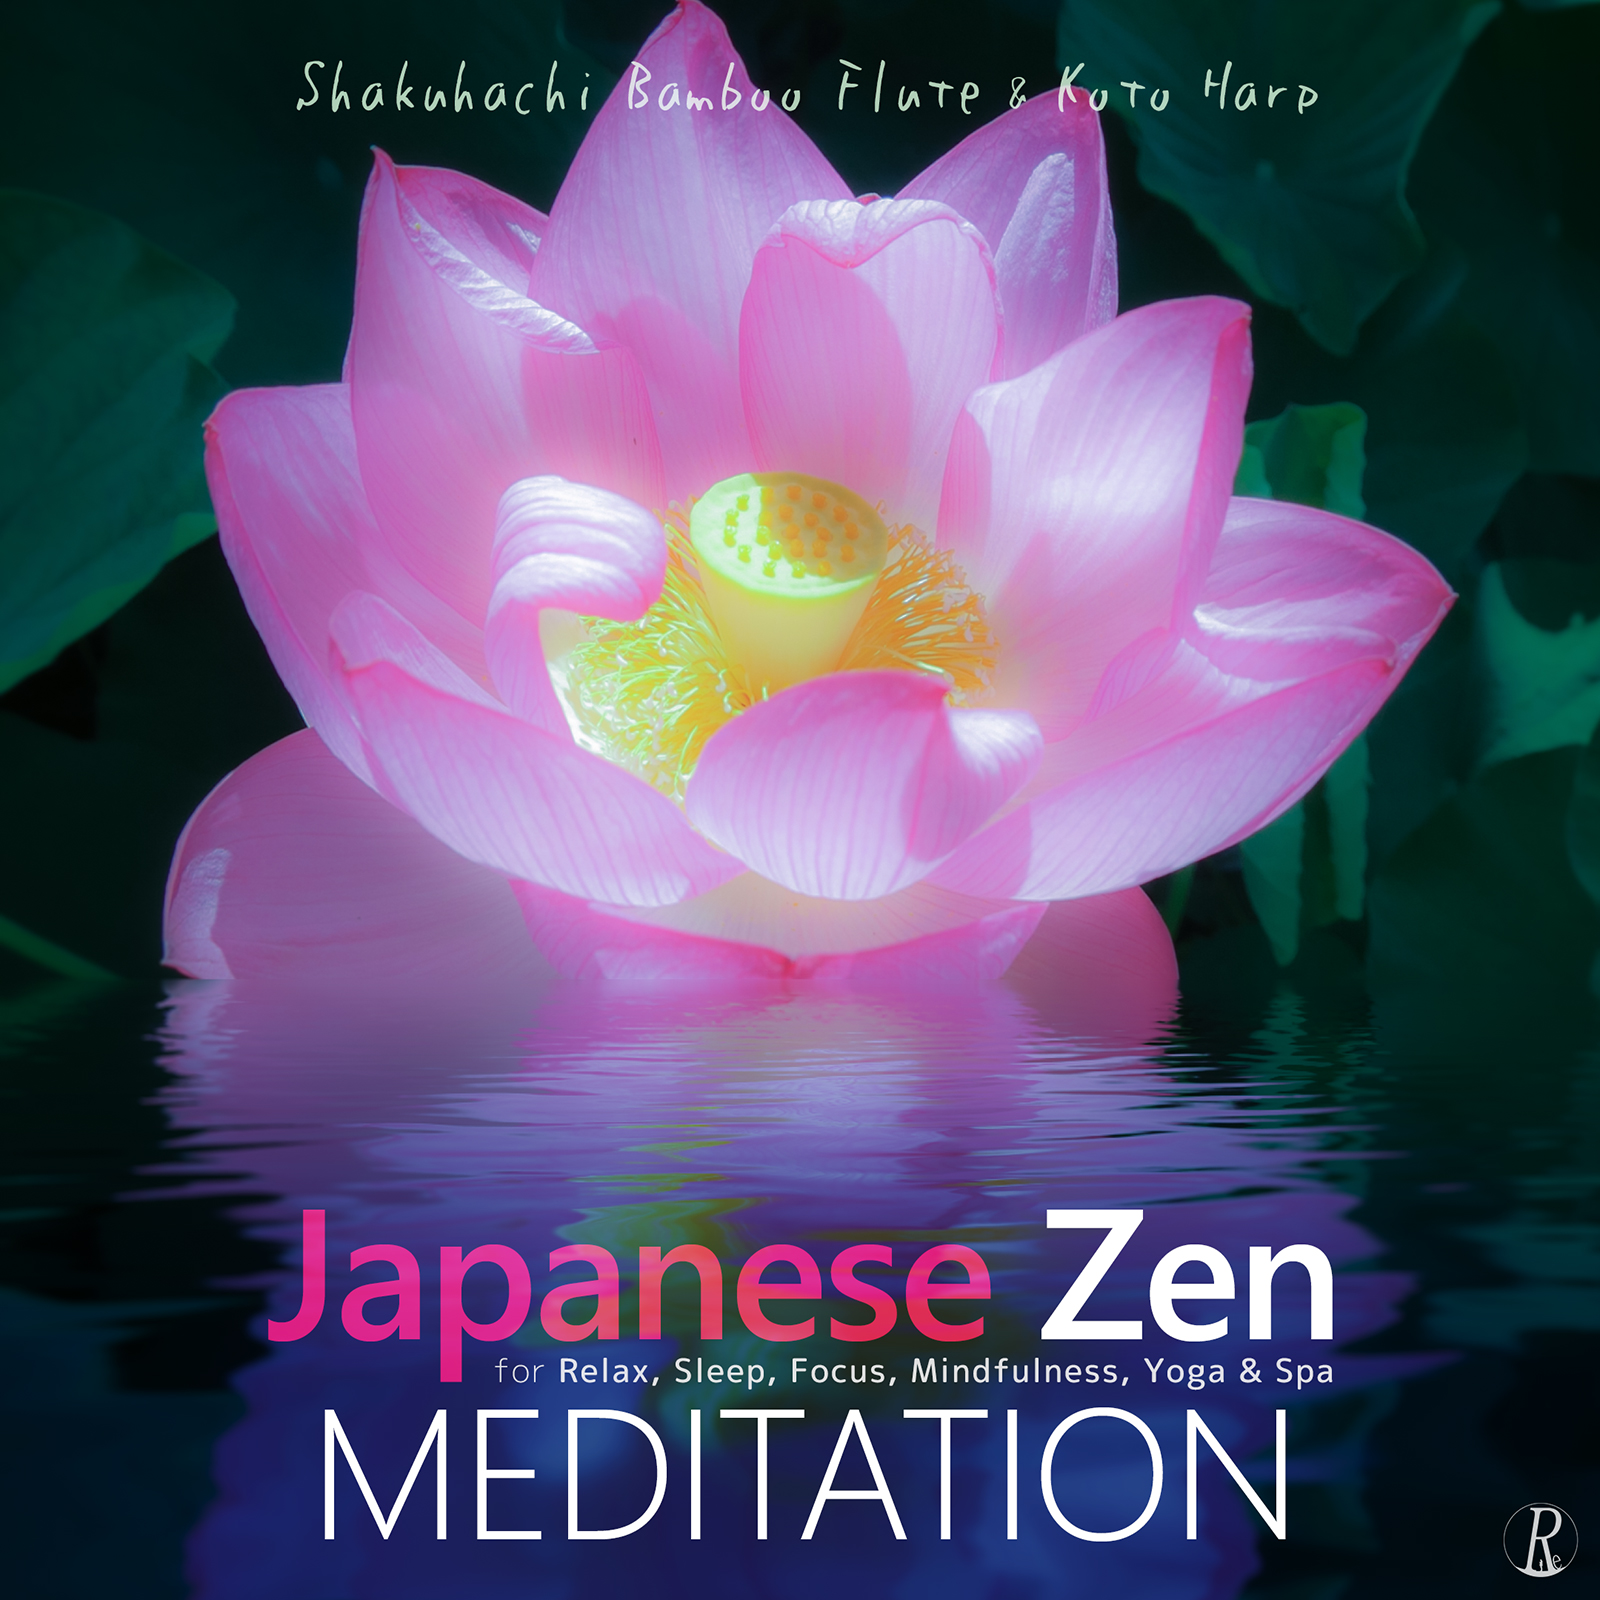 Japanese Zen Meditation - Shakuhachi Bamboo Flute & Koto Harp for Relax, Sleep, Focus, Mindfulness, Yoga & Spa